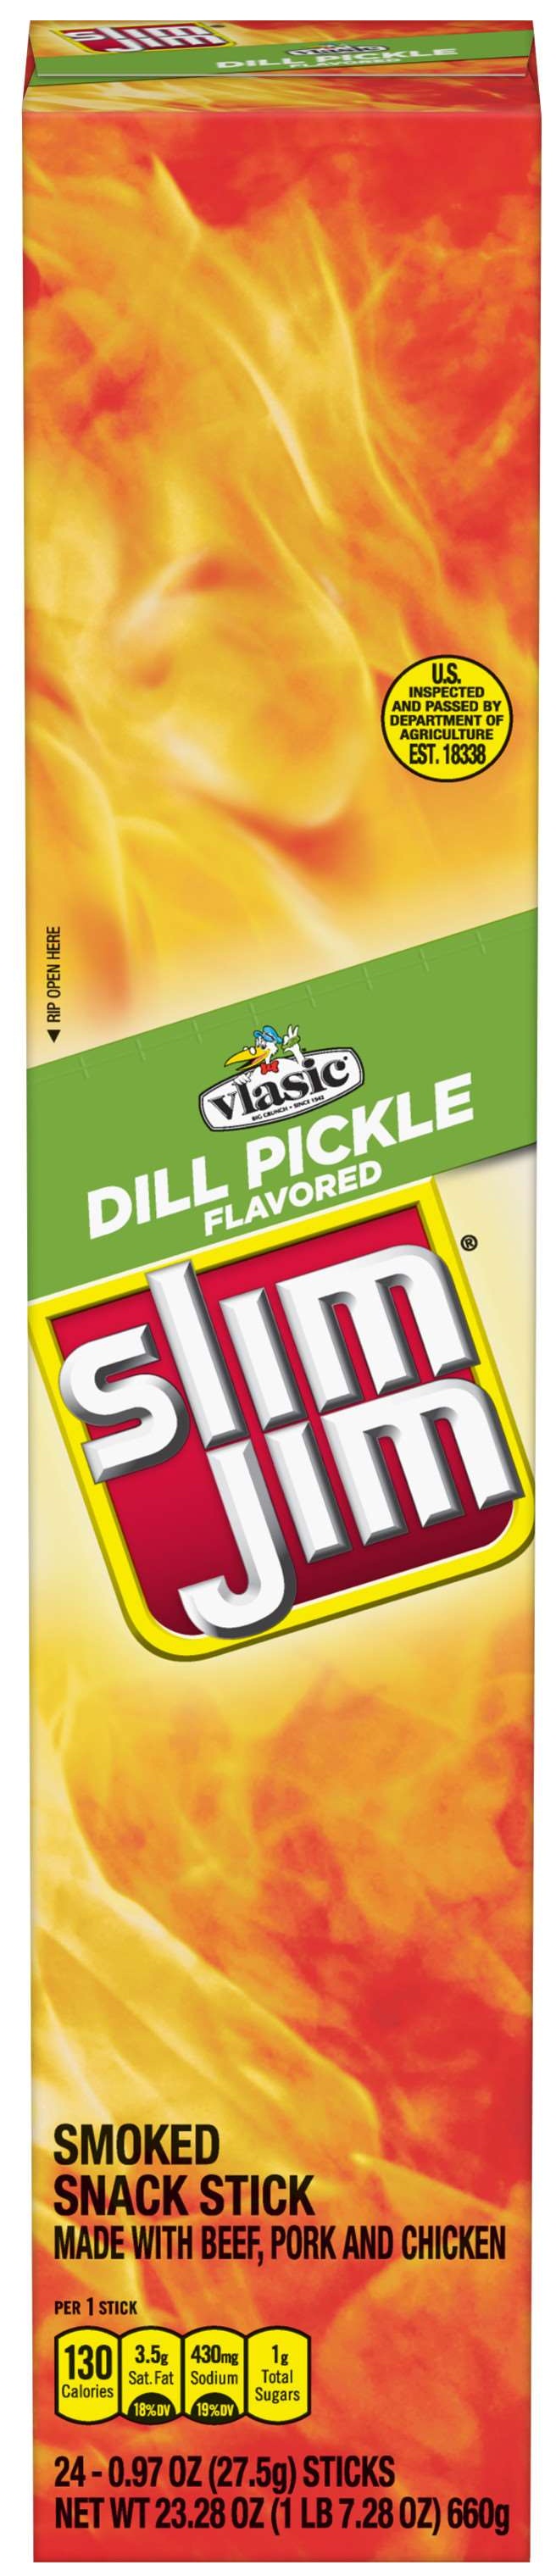 Slim Jim Giant - Original 27.5g Stick, 24 Count